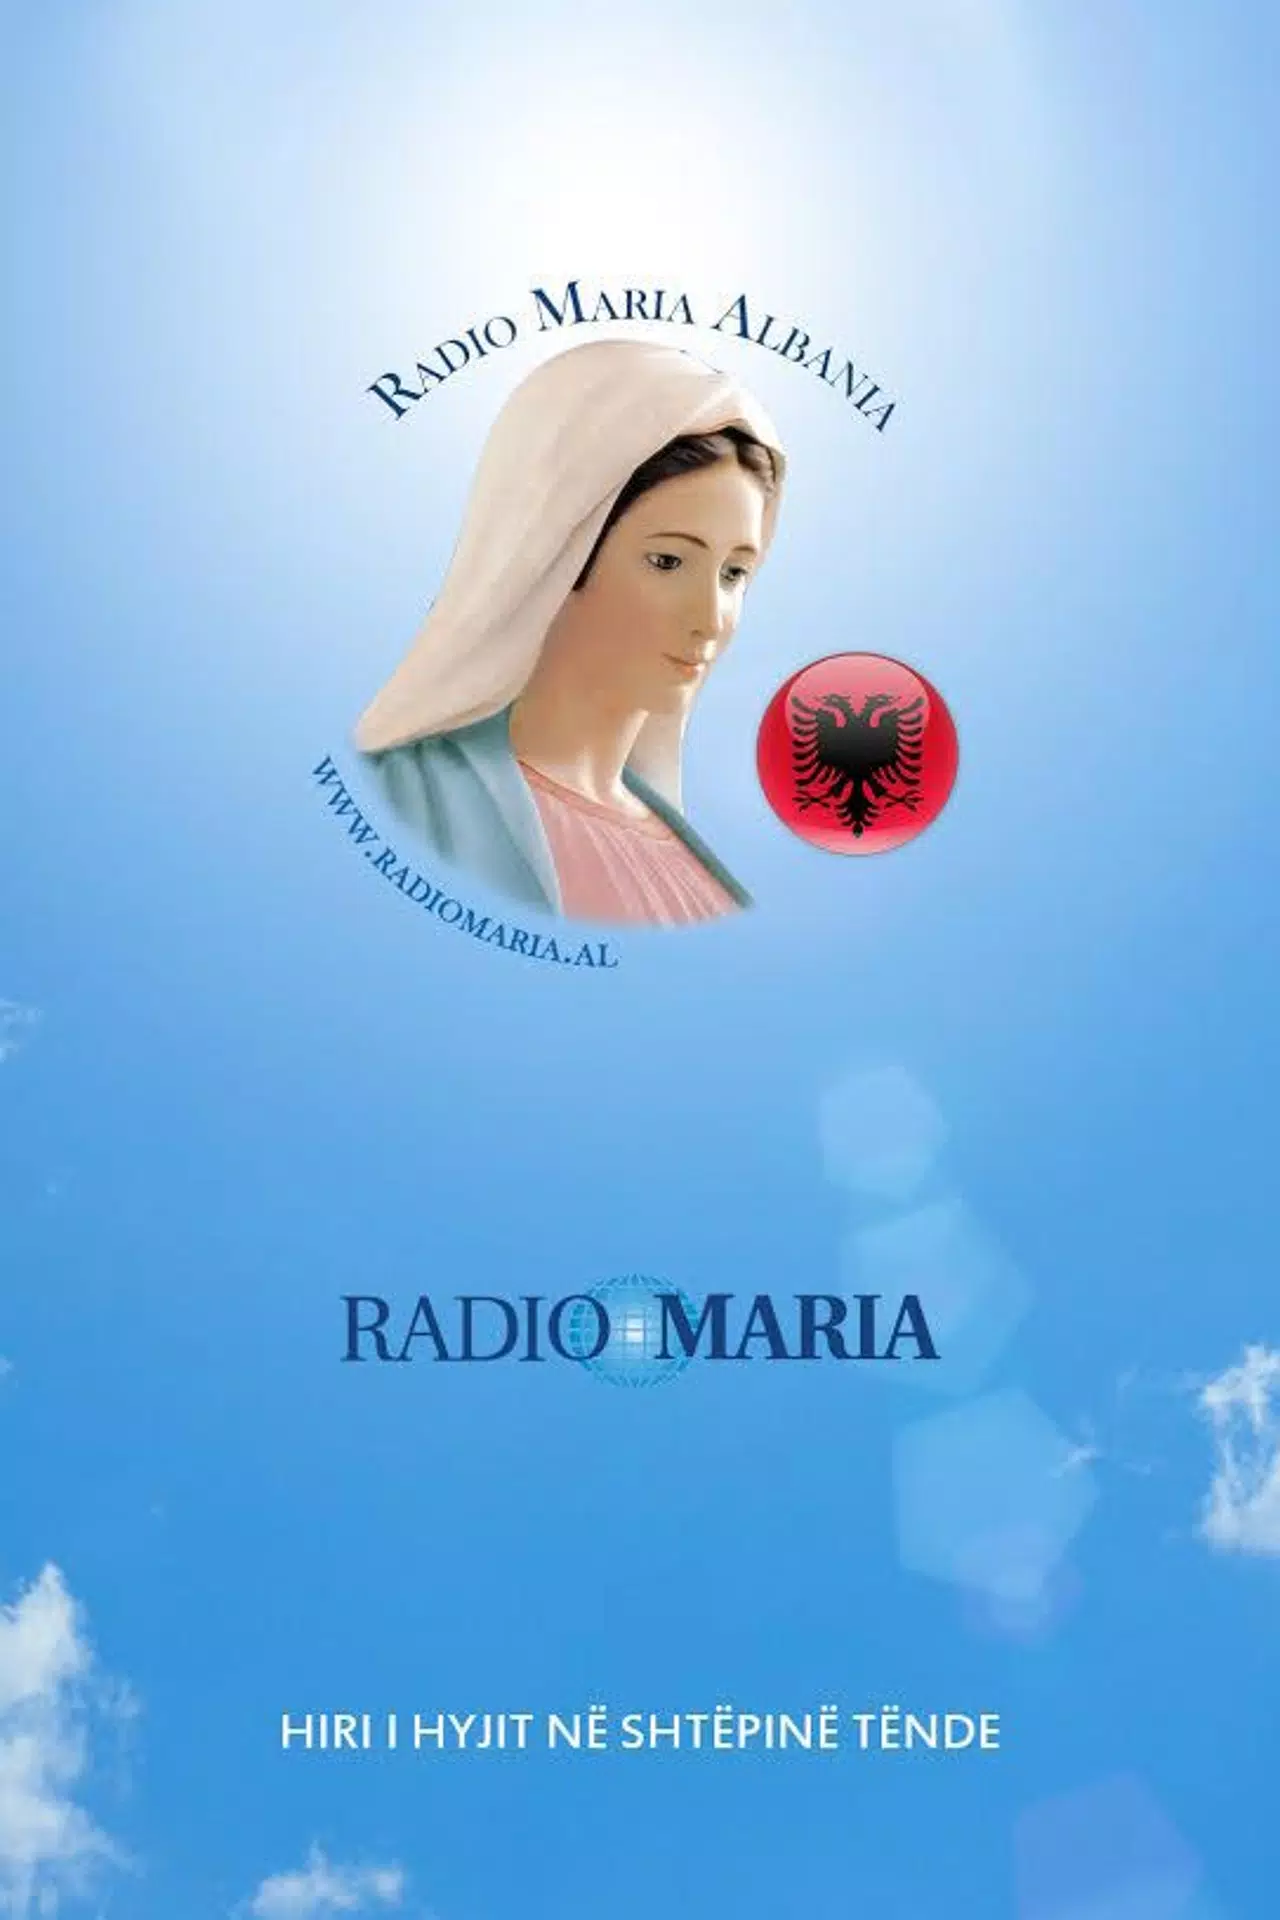 Radio Maria Albania APK for Android Download